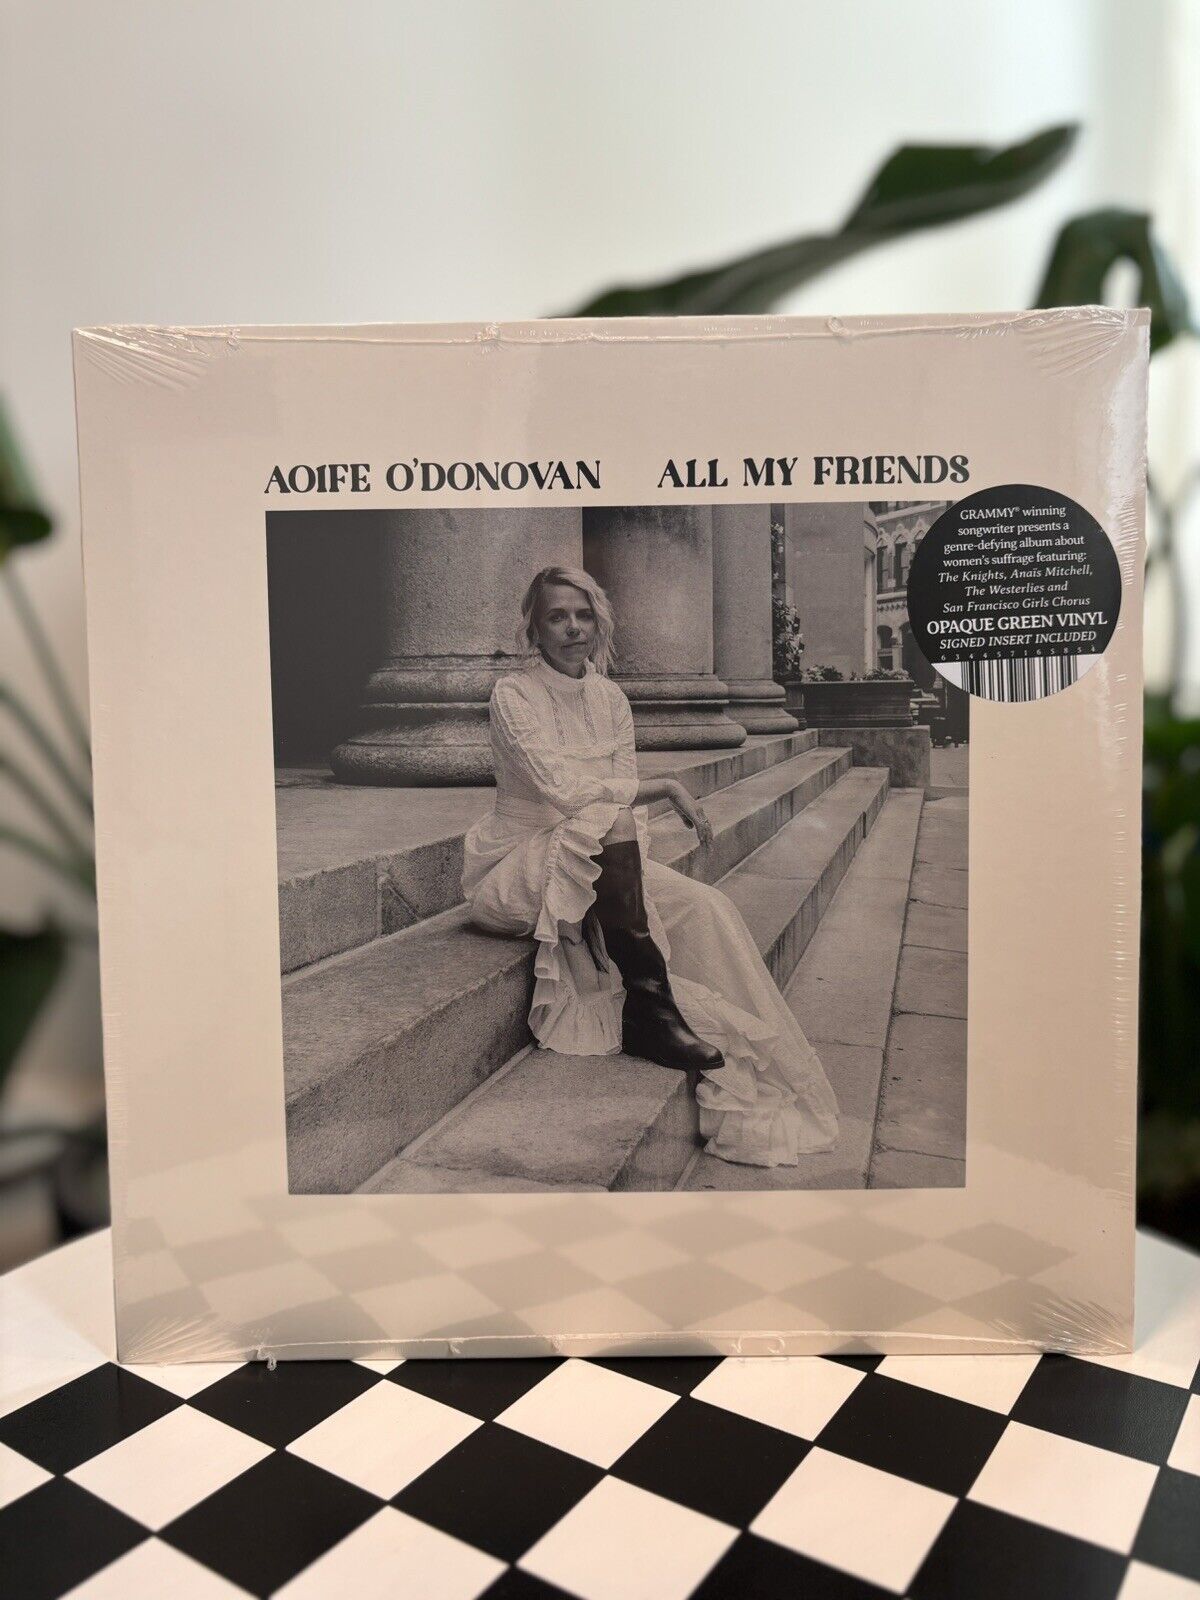 Aoife O\'Donovan - All My Friends [New Vinyl LP] OPAGUE GREEN VINYL SIGNED INSERT